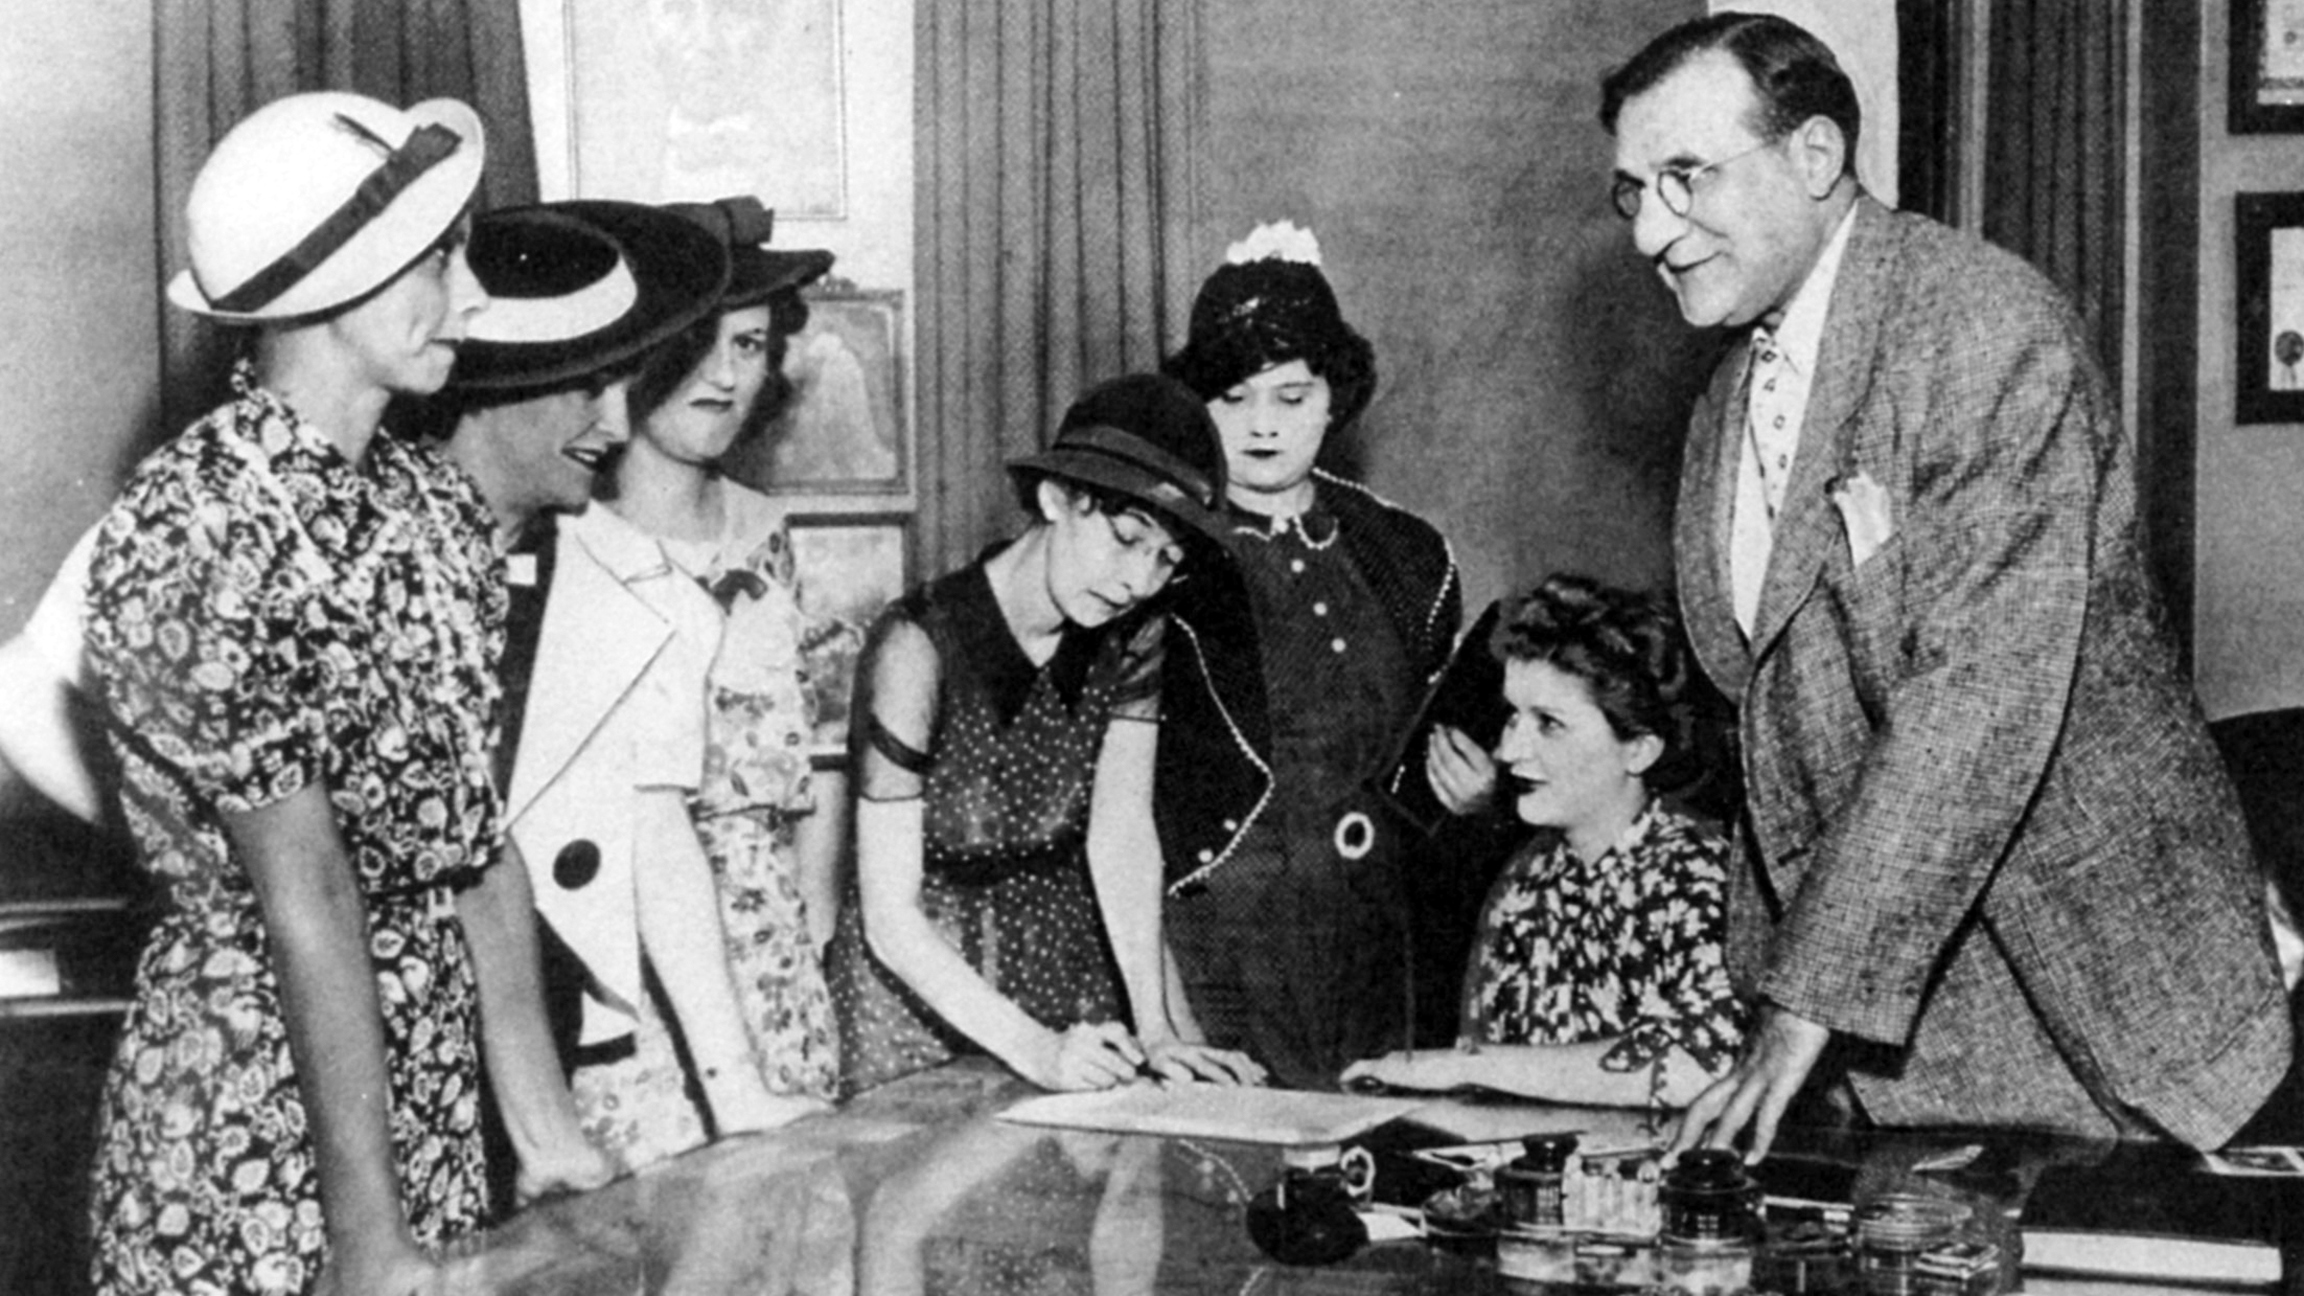 A group photo of radium girls